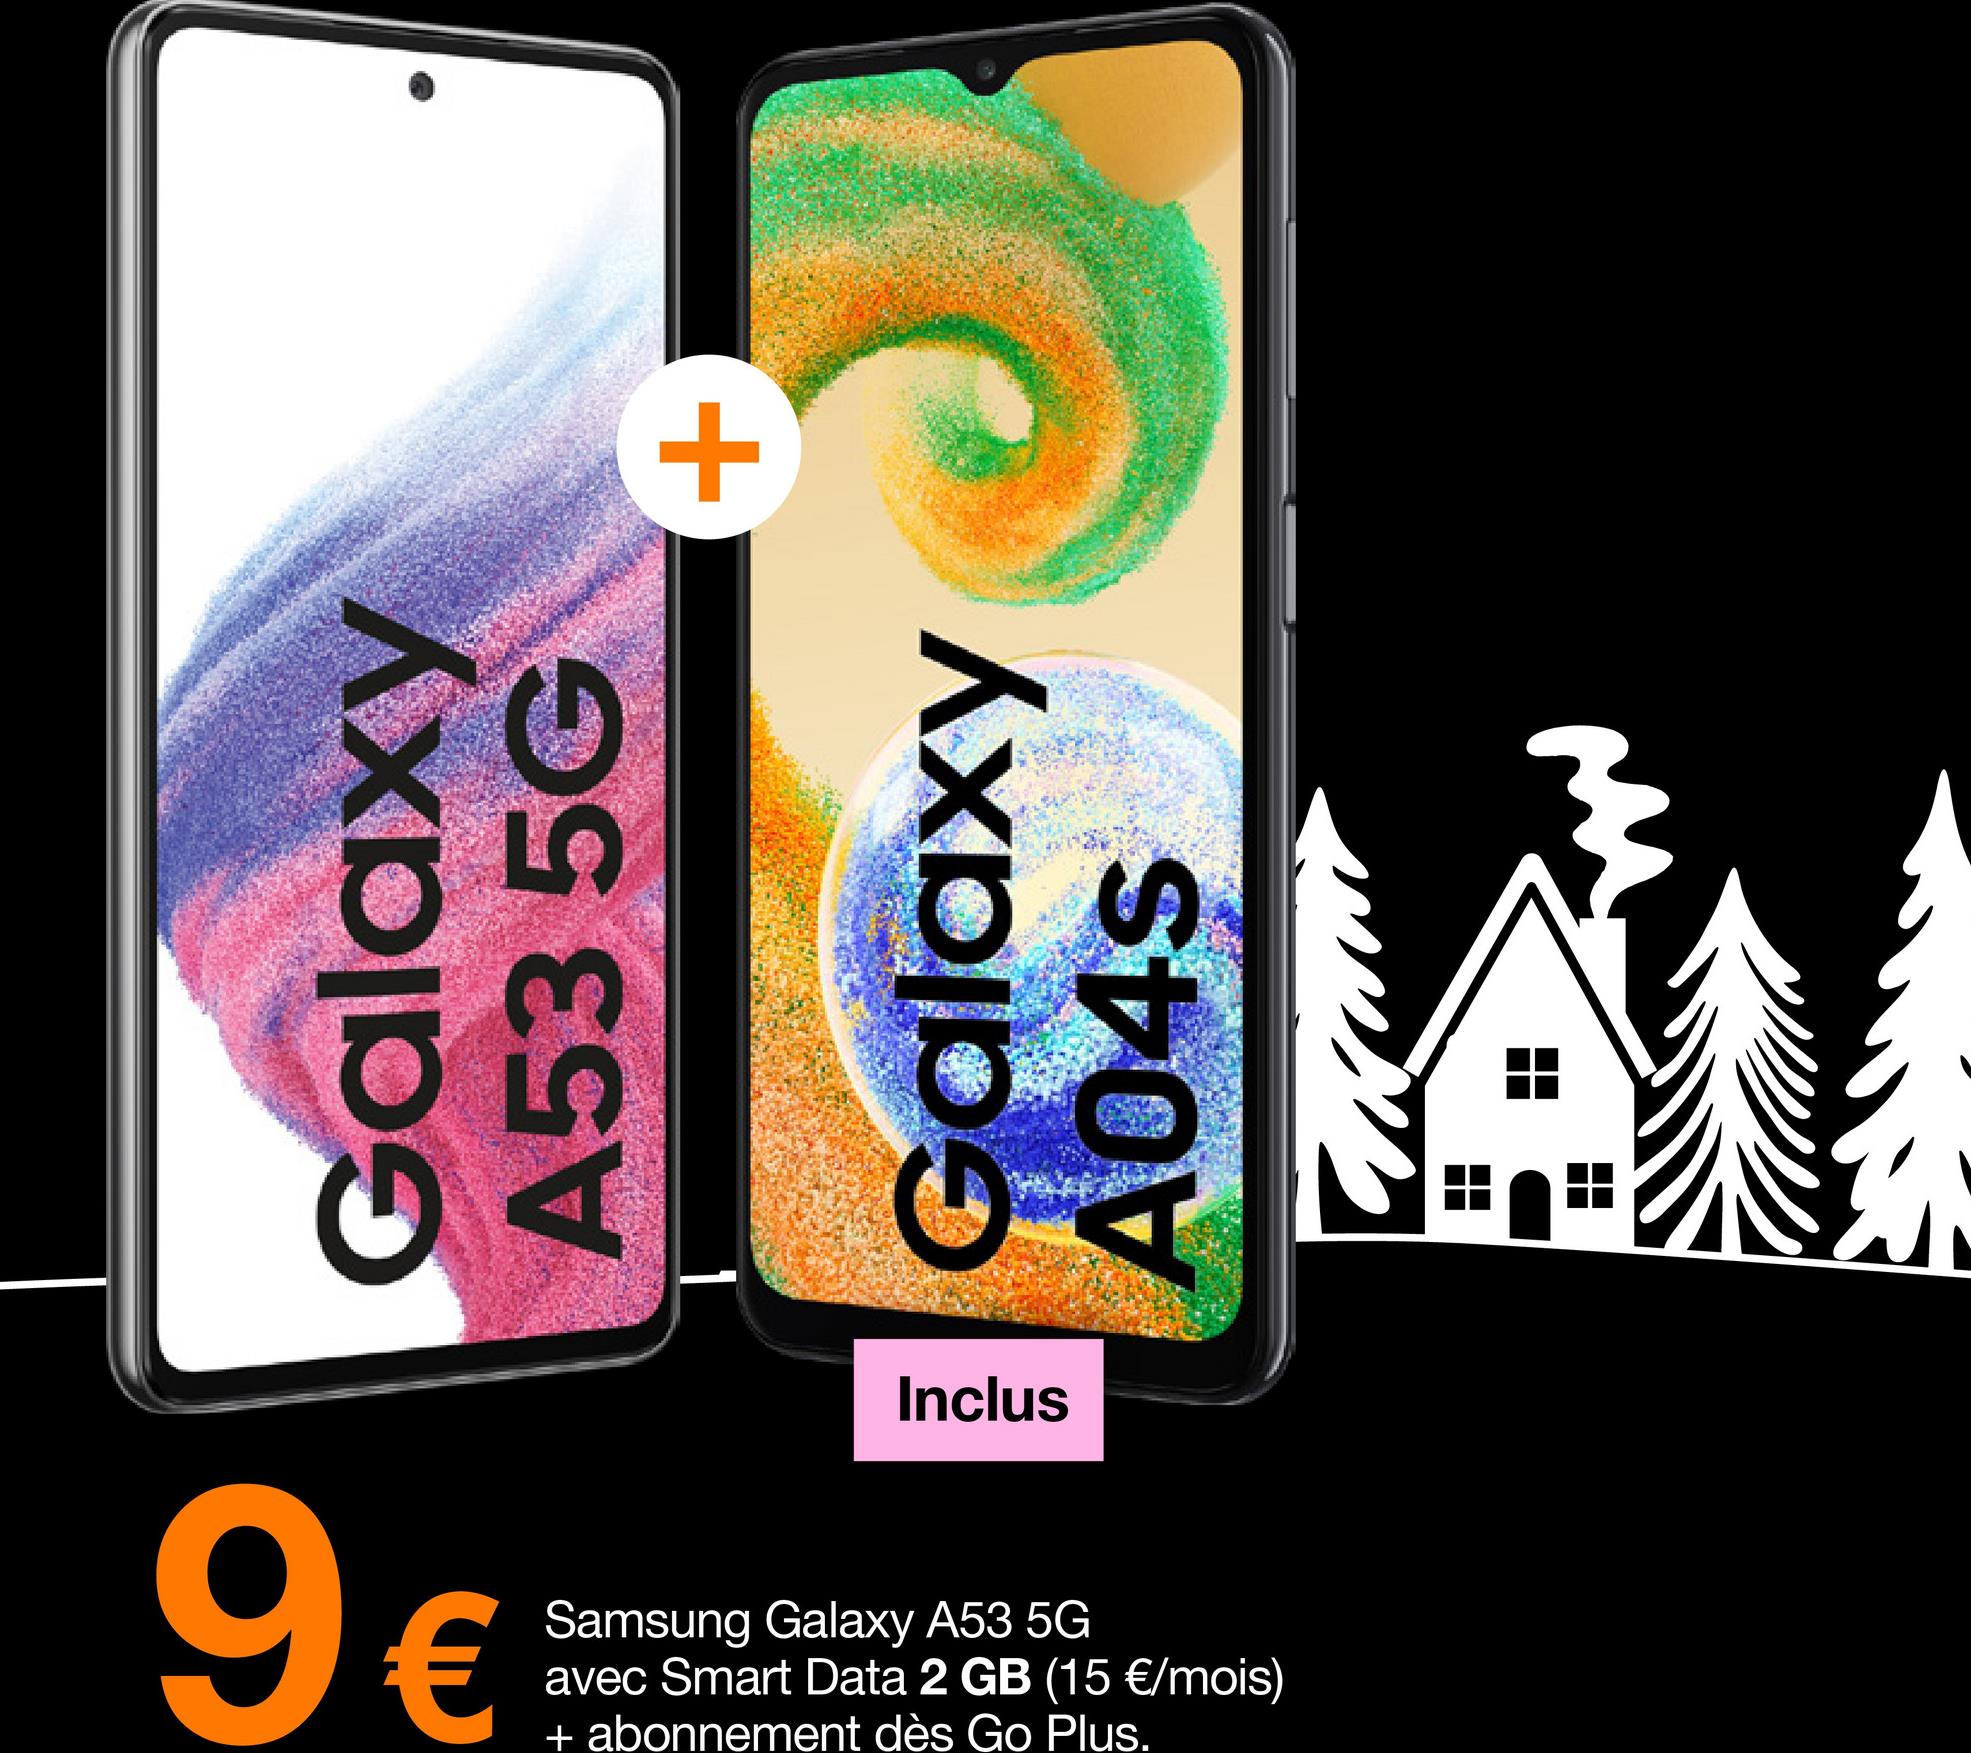 Galaxy
A53 5G
9€
+
Galaxy
A04S
Samsung Galaxy A53 5G
avec Smart Data 2 GB (15 €/mois)
abonnement dès Go Plus.